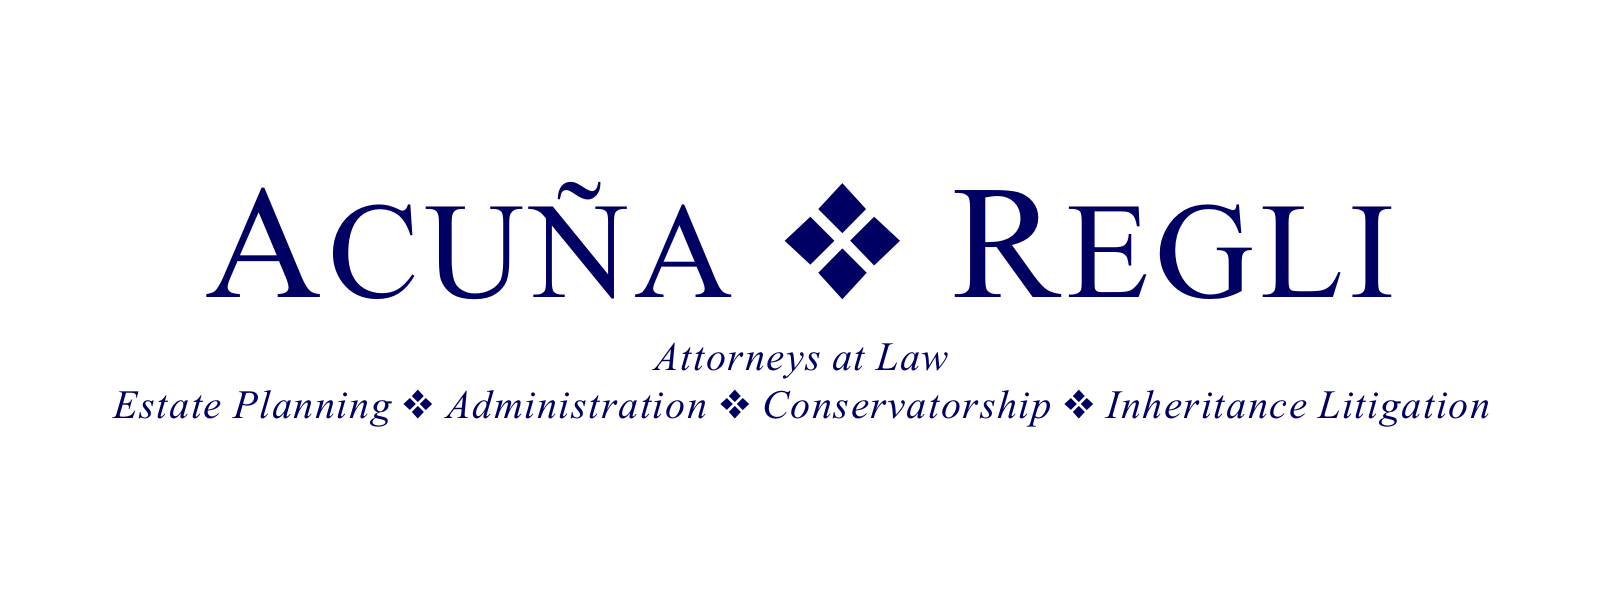 Acuna Regli Attorneys at Law - Estate Planning, Administration, Conservatorship, Inheritance Litigation